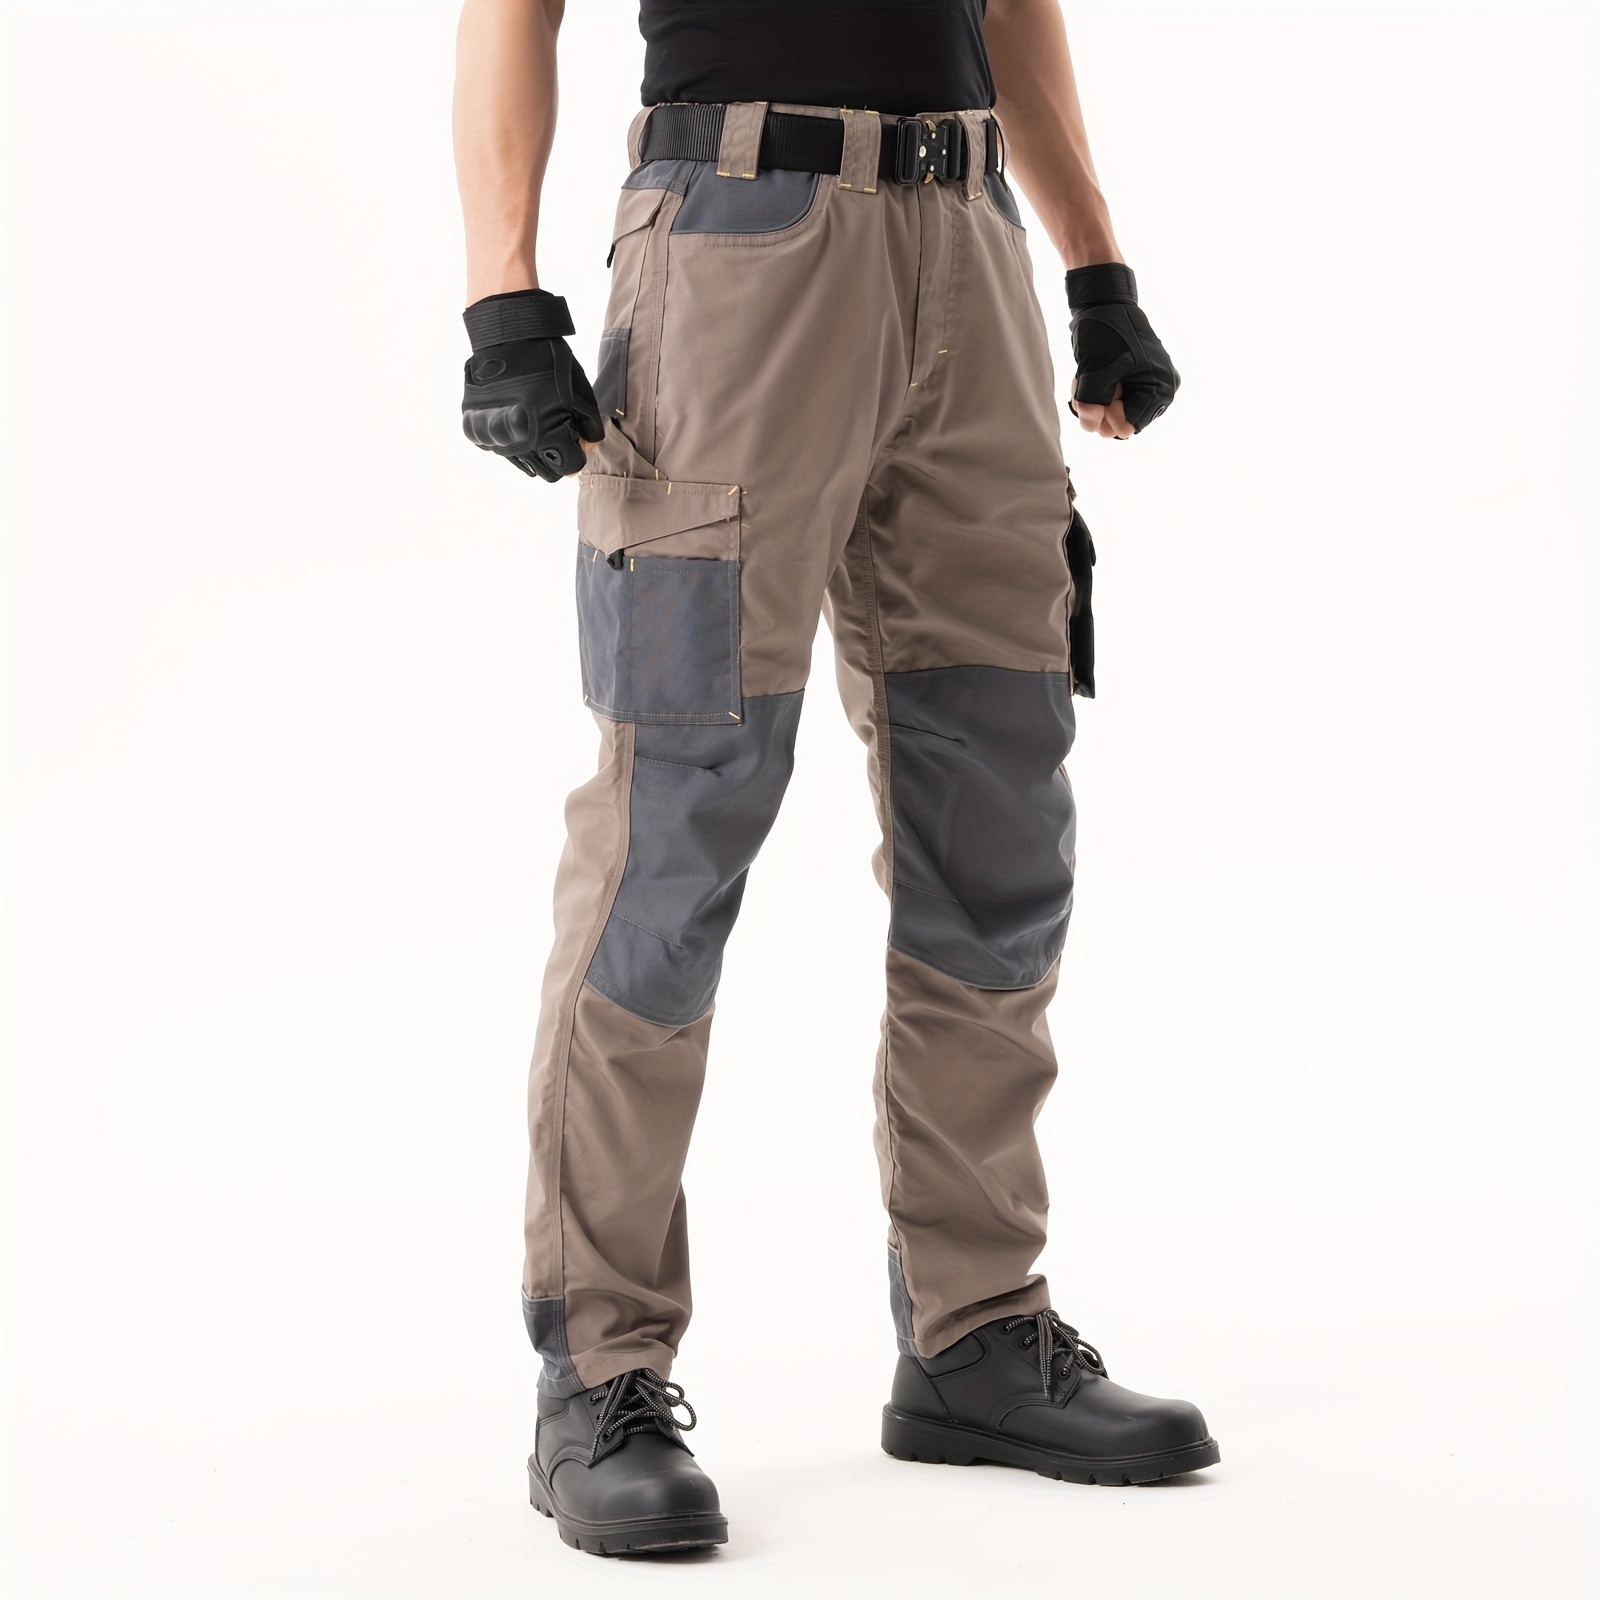 Men's multi-pocket work trousers